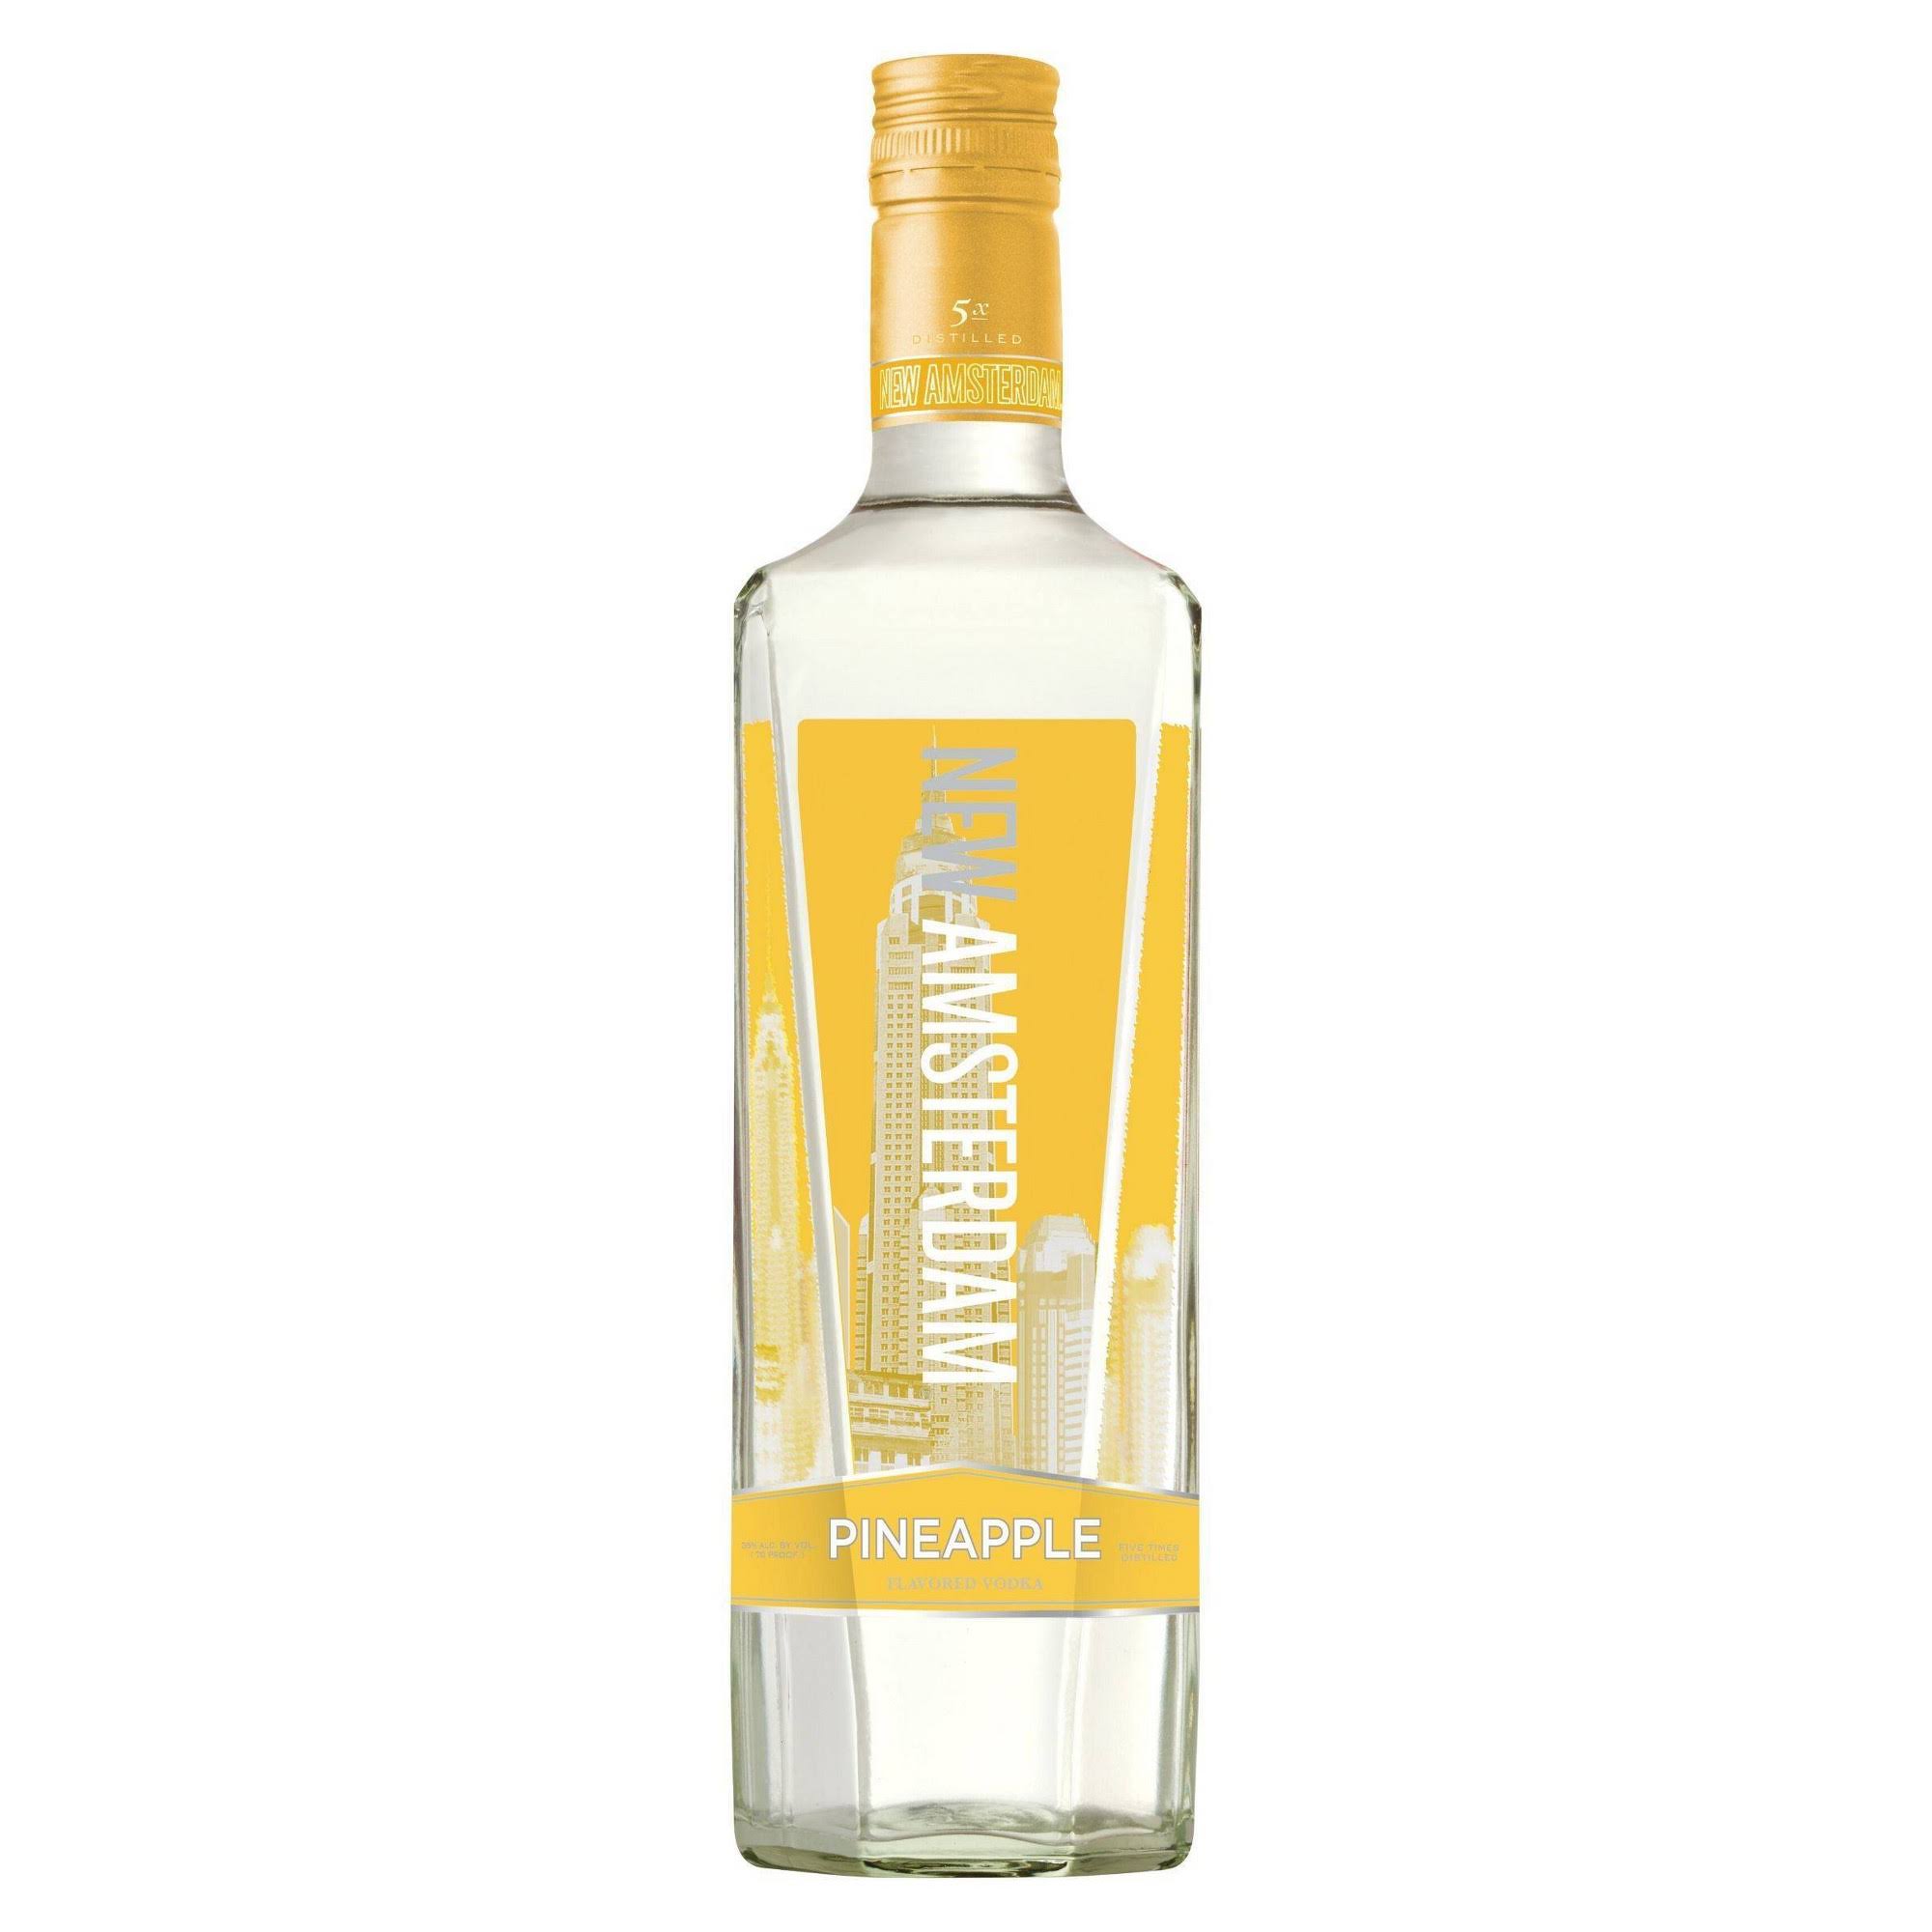 New Amsterdam Vodka, Pineapple Flavored - 750 ml